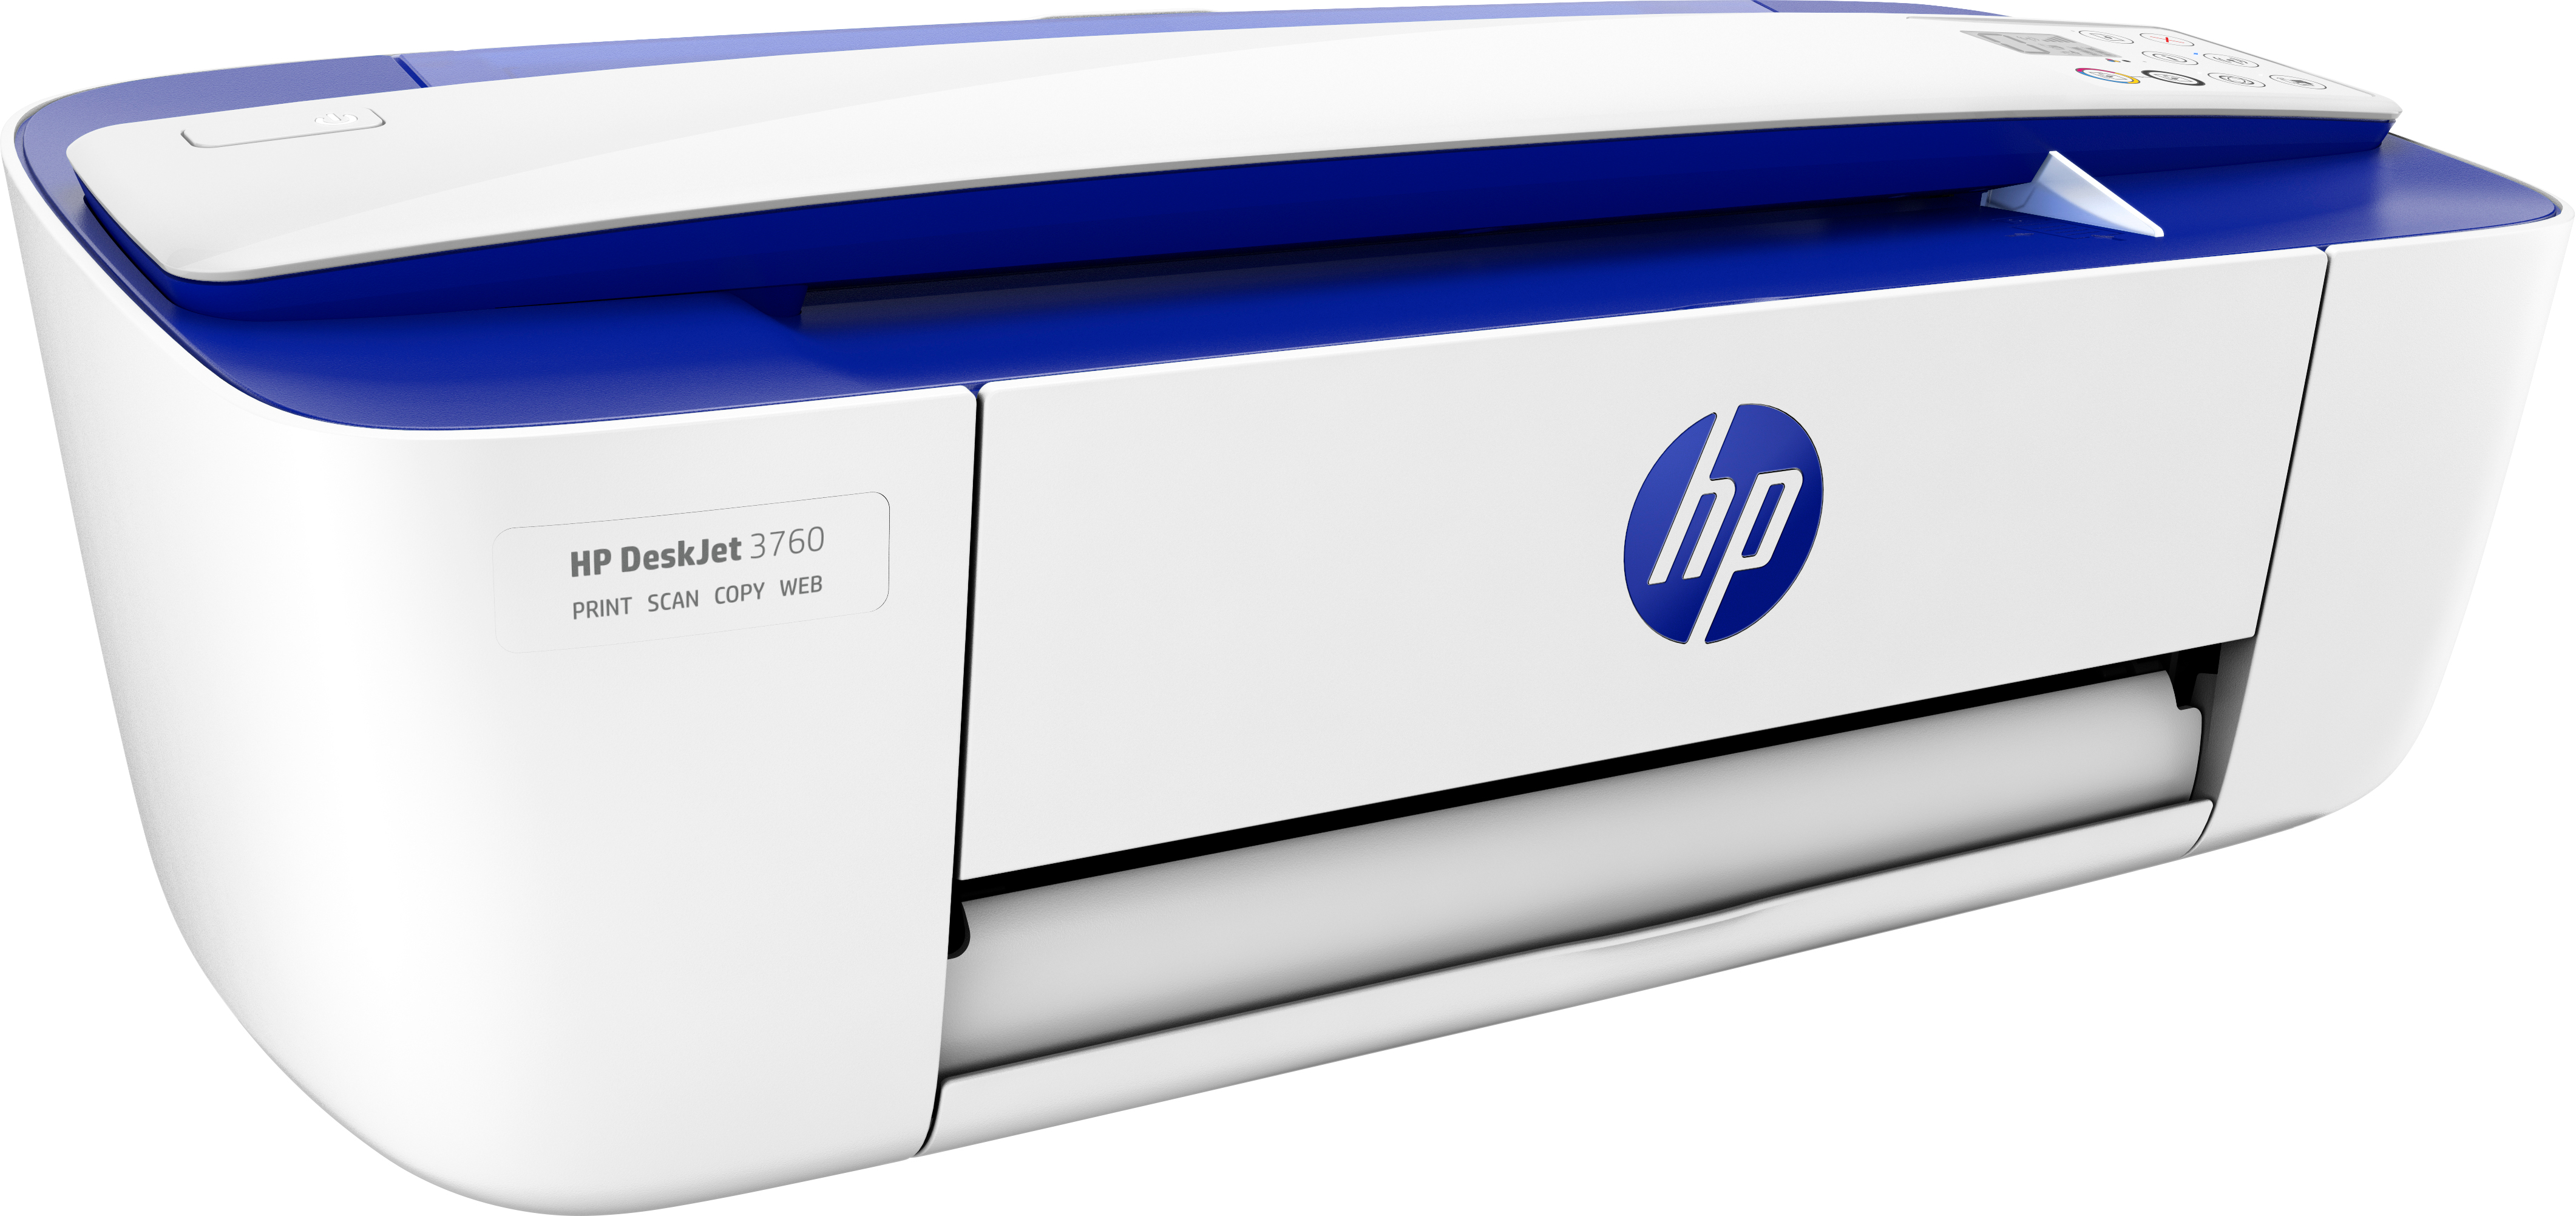 HP DeskJet Stampante multifunzione 3760, Colore, per Casa, Stampa, copia, scansione, wireless, wireless; idonea a Instant Ink; stampa da smartphone o tablet; scansione verso PDF [T8X19B]